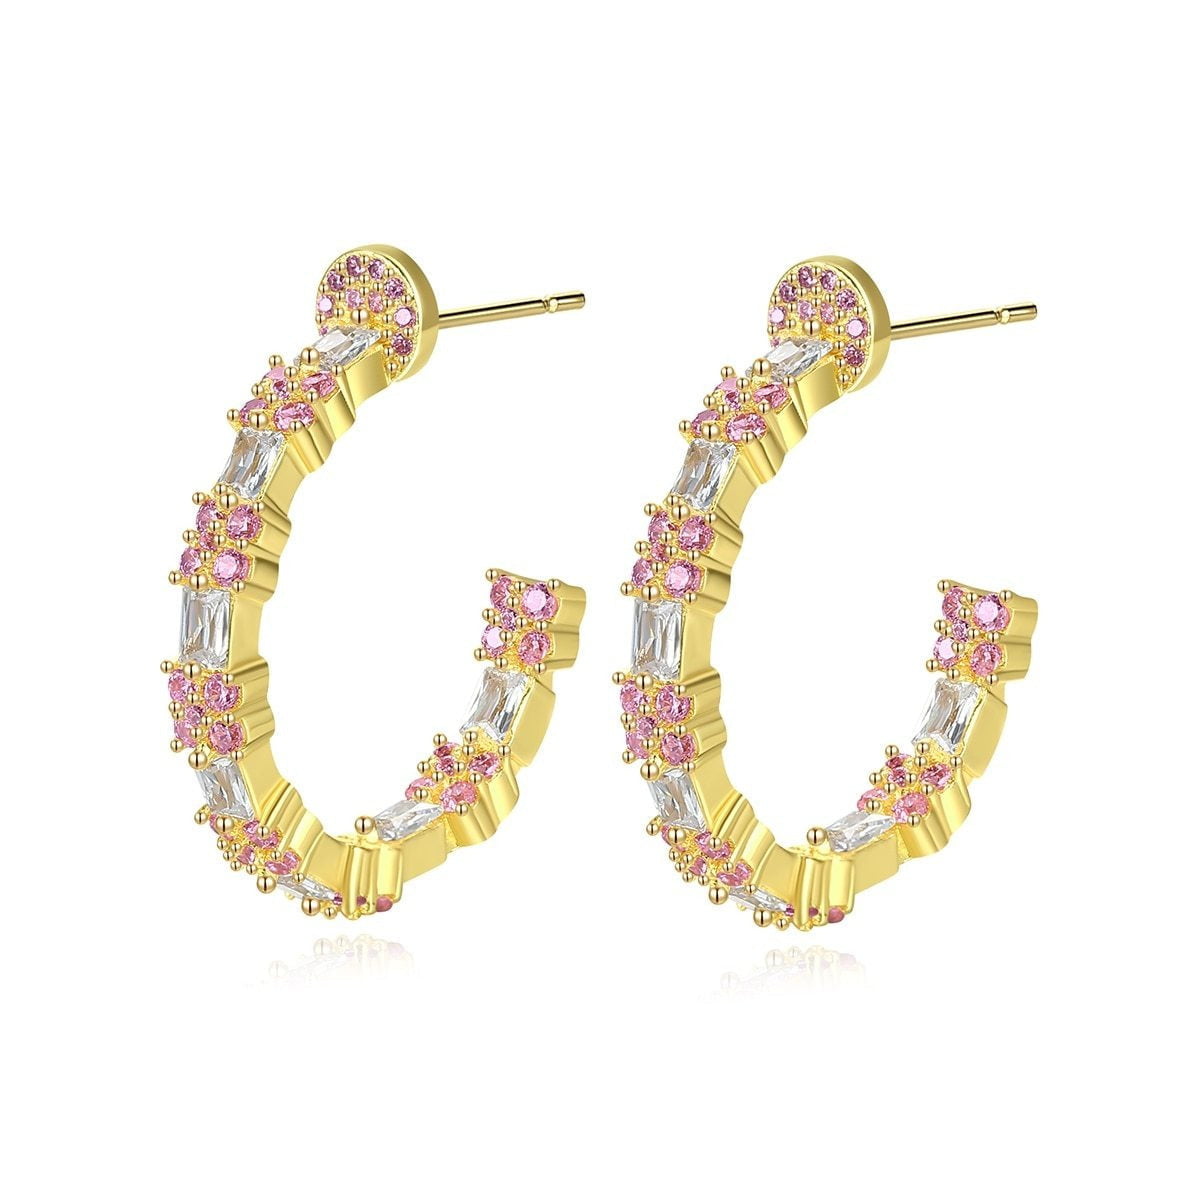 Gainesville Earrings - ANN VOYAGE